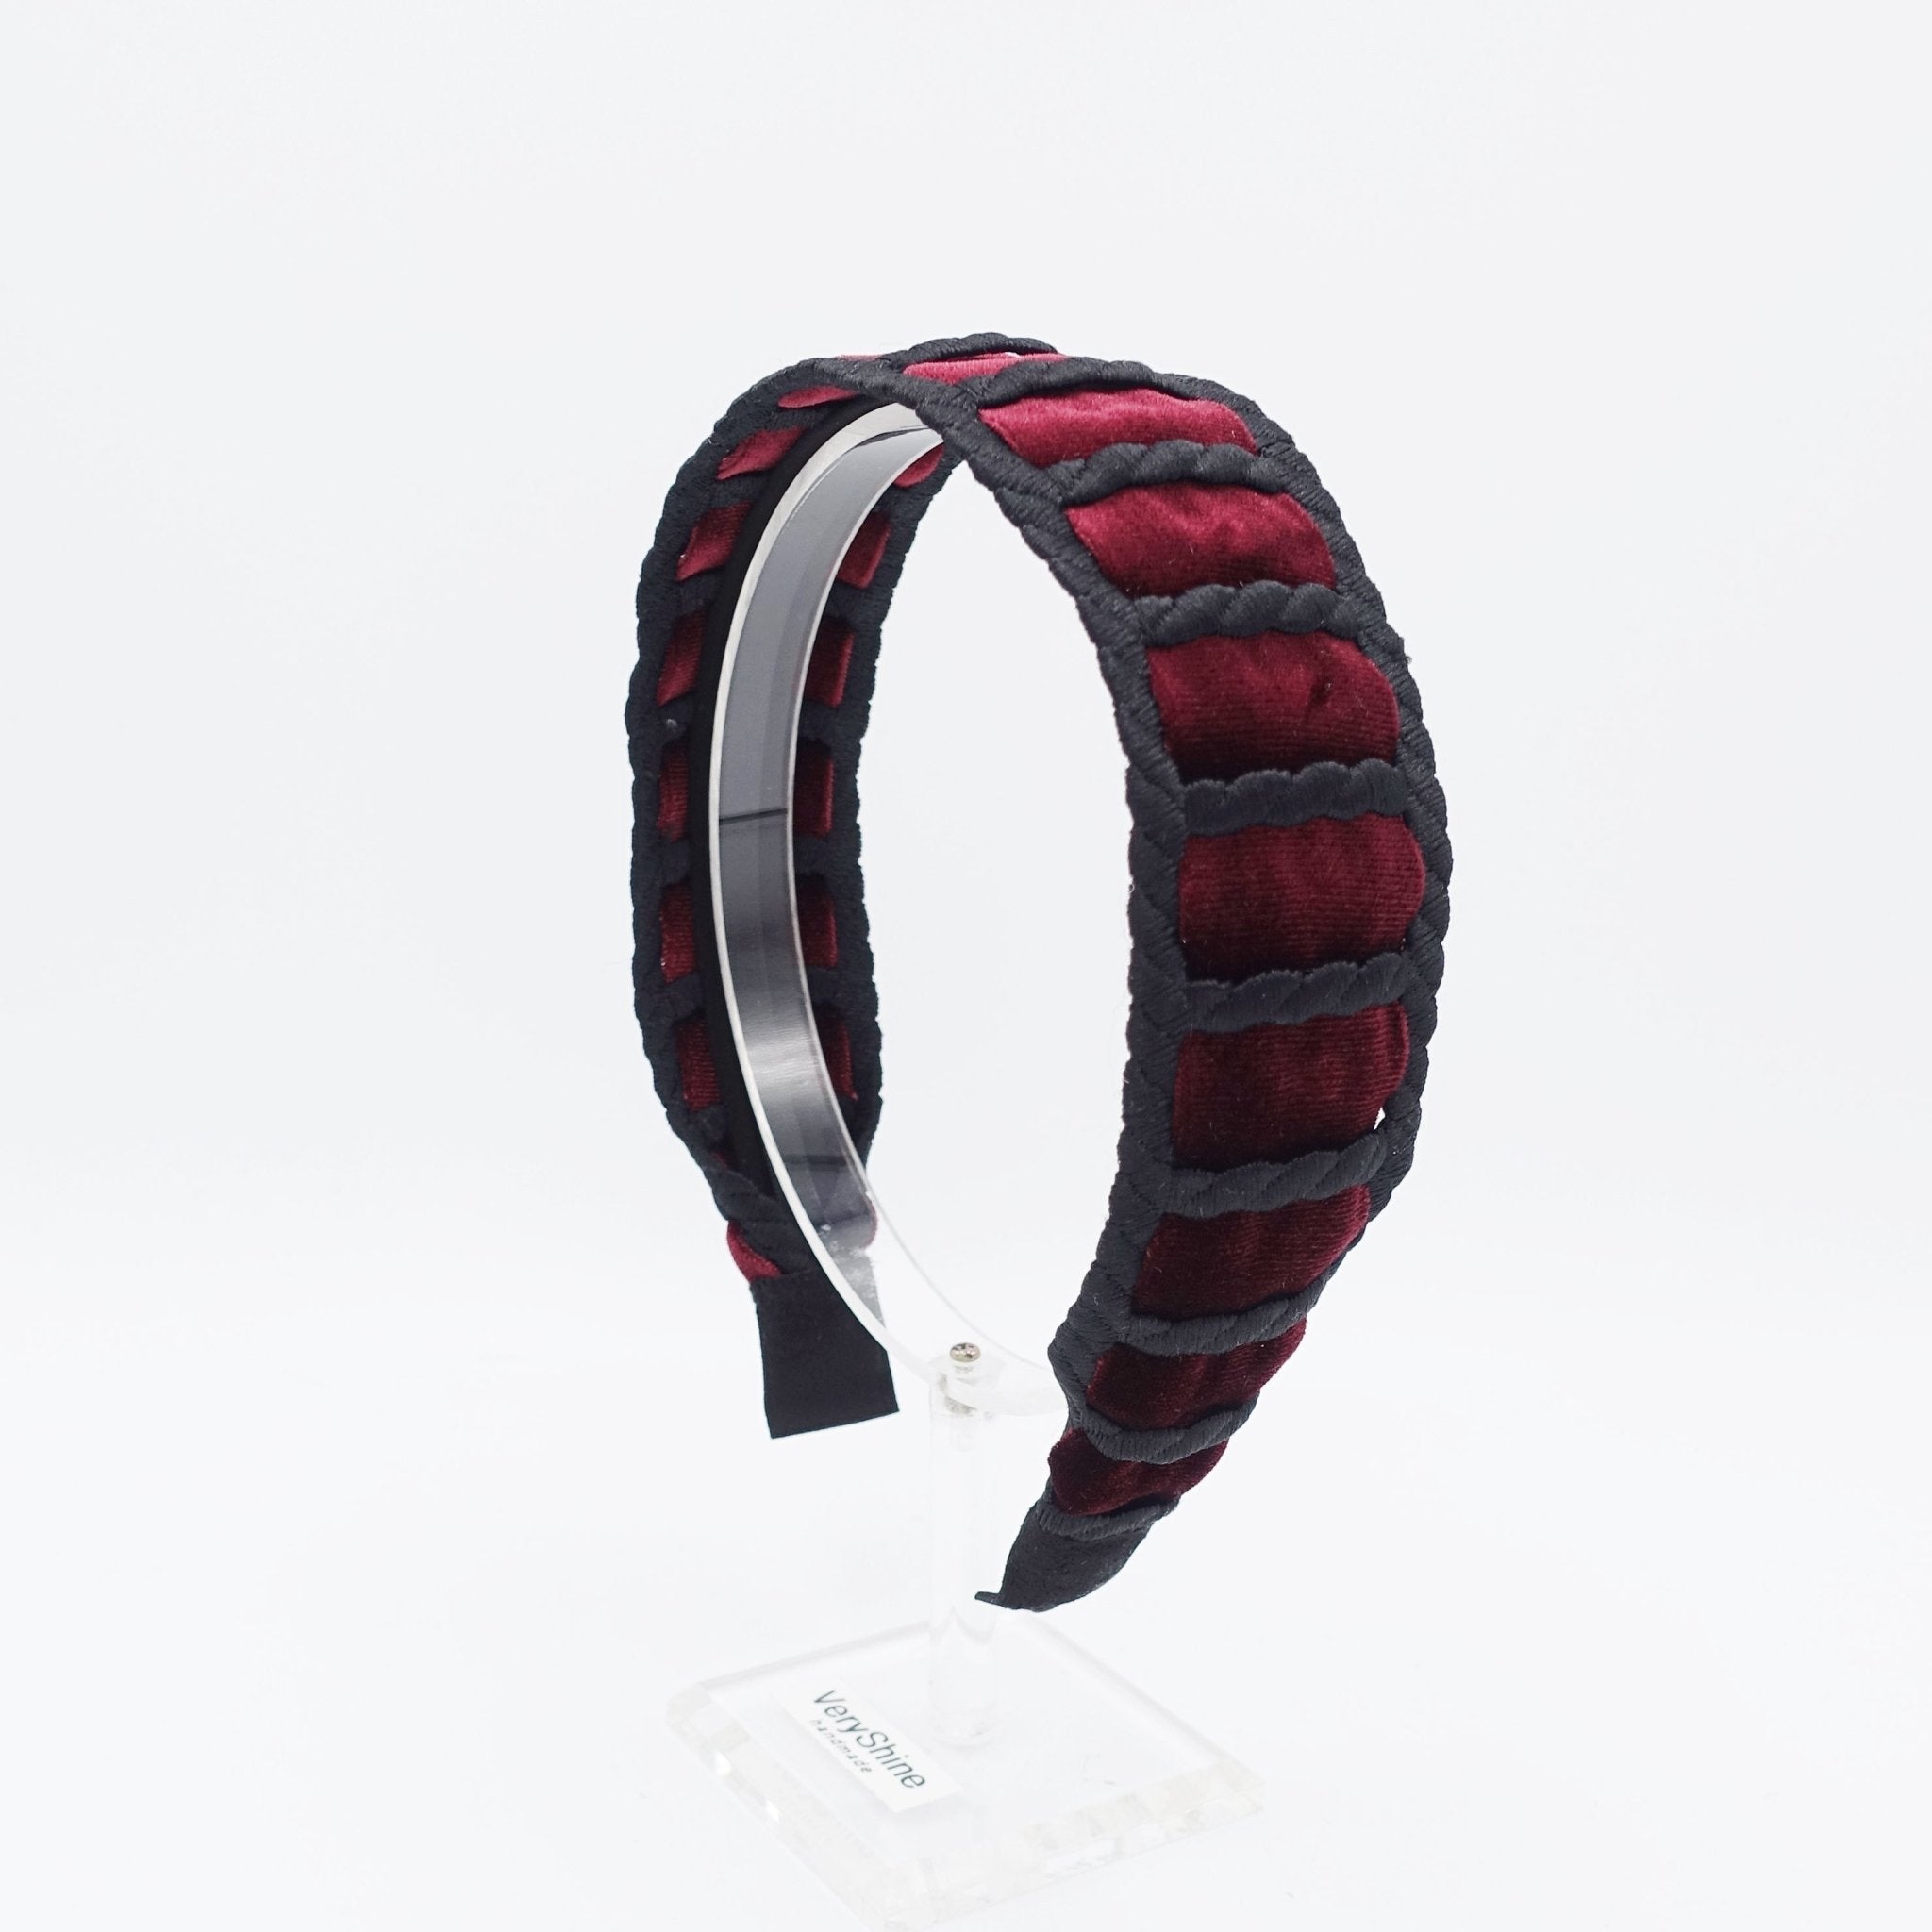 VeryShine velvet headband rectangle frame embellished hairband unique Fall Winter hair accessory for women